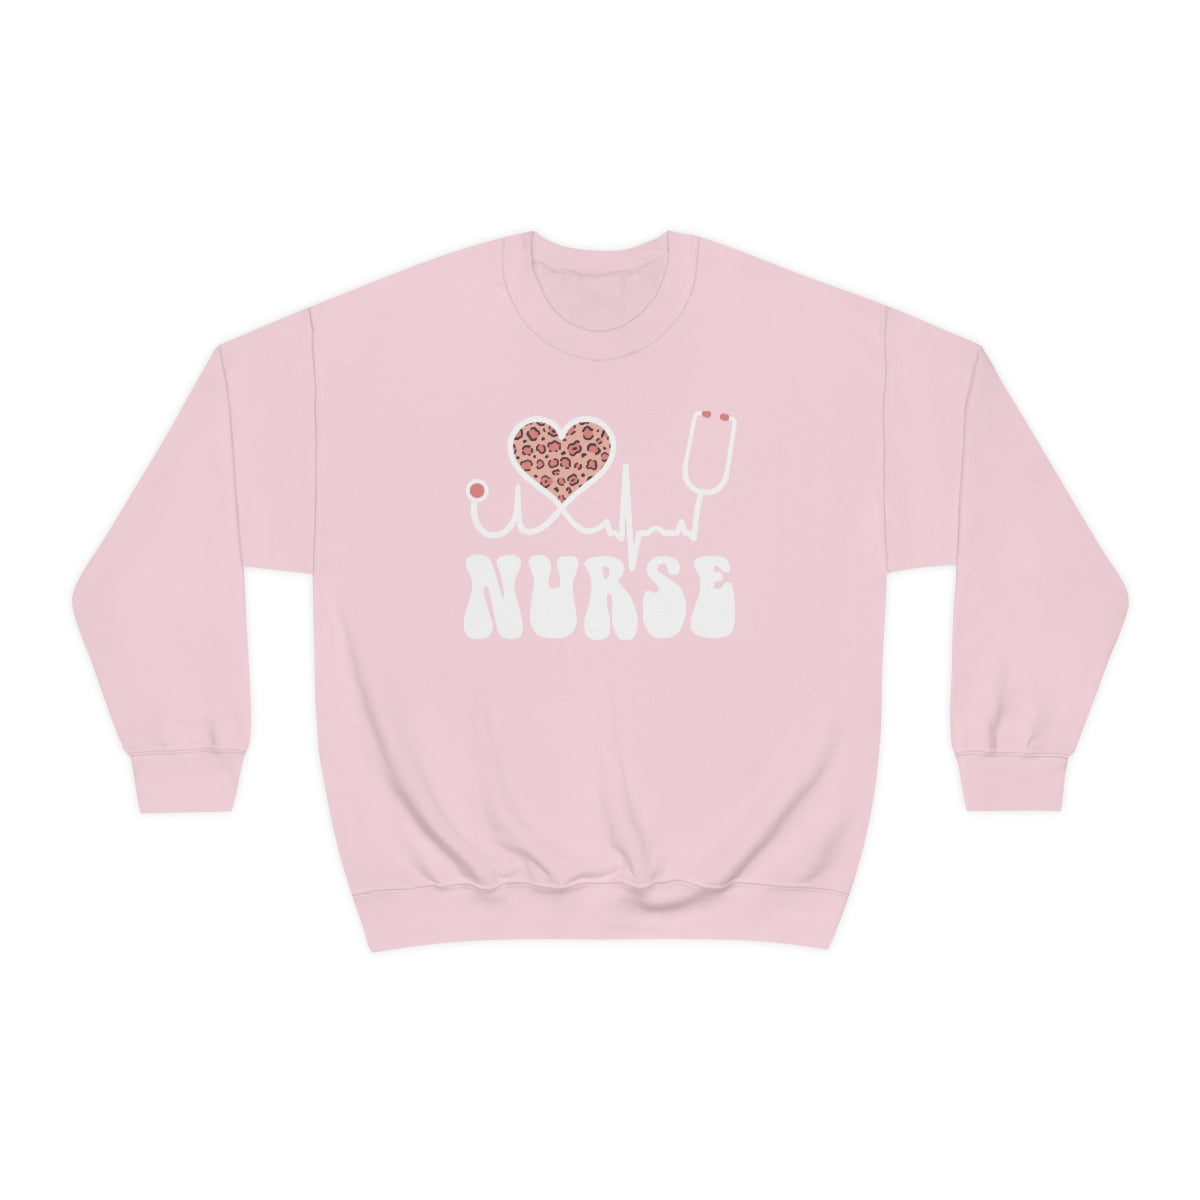 Nurse Sweatshirt, Practitioner Graphic Crewneck Fleece Cotton Sweater Jumper Pullover Men Women Adult Aesthetic Top Starcove Fashion